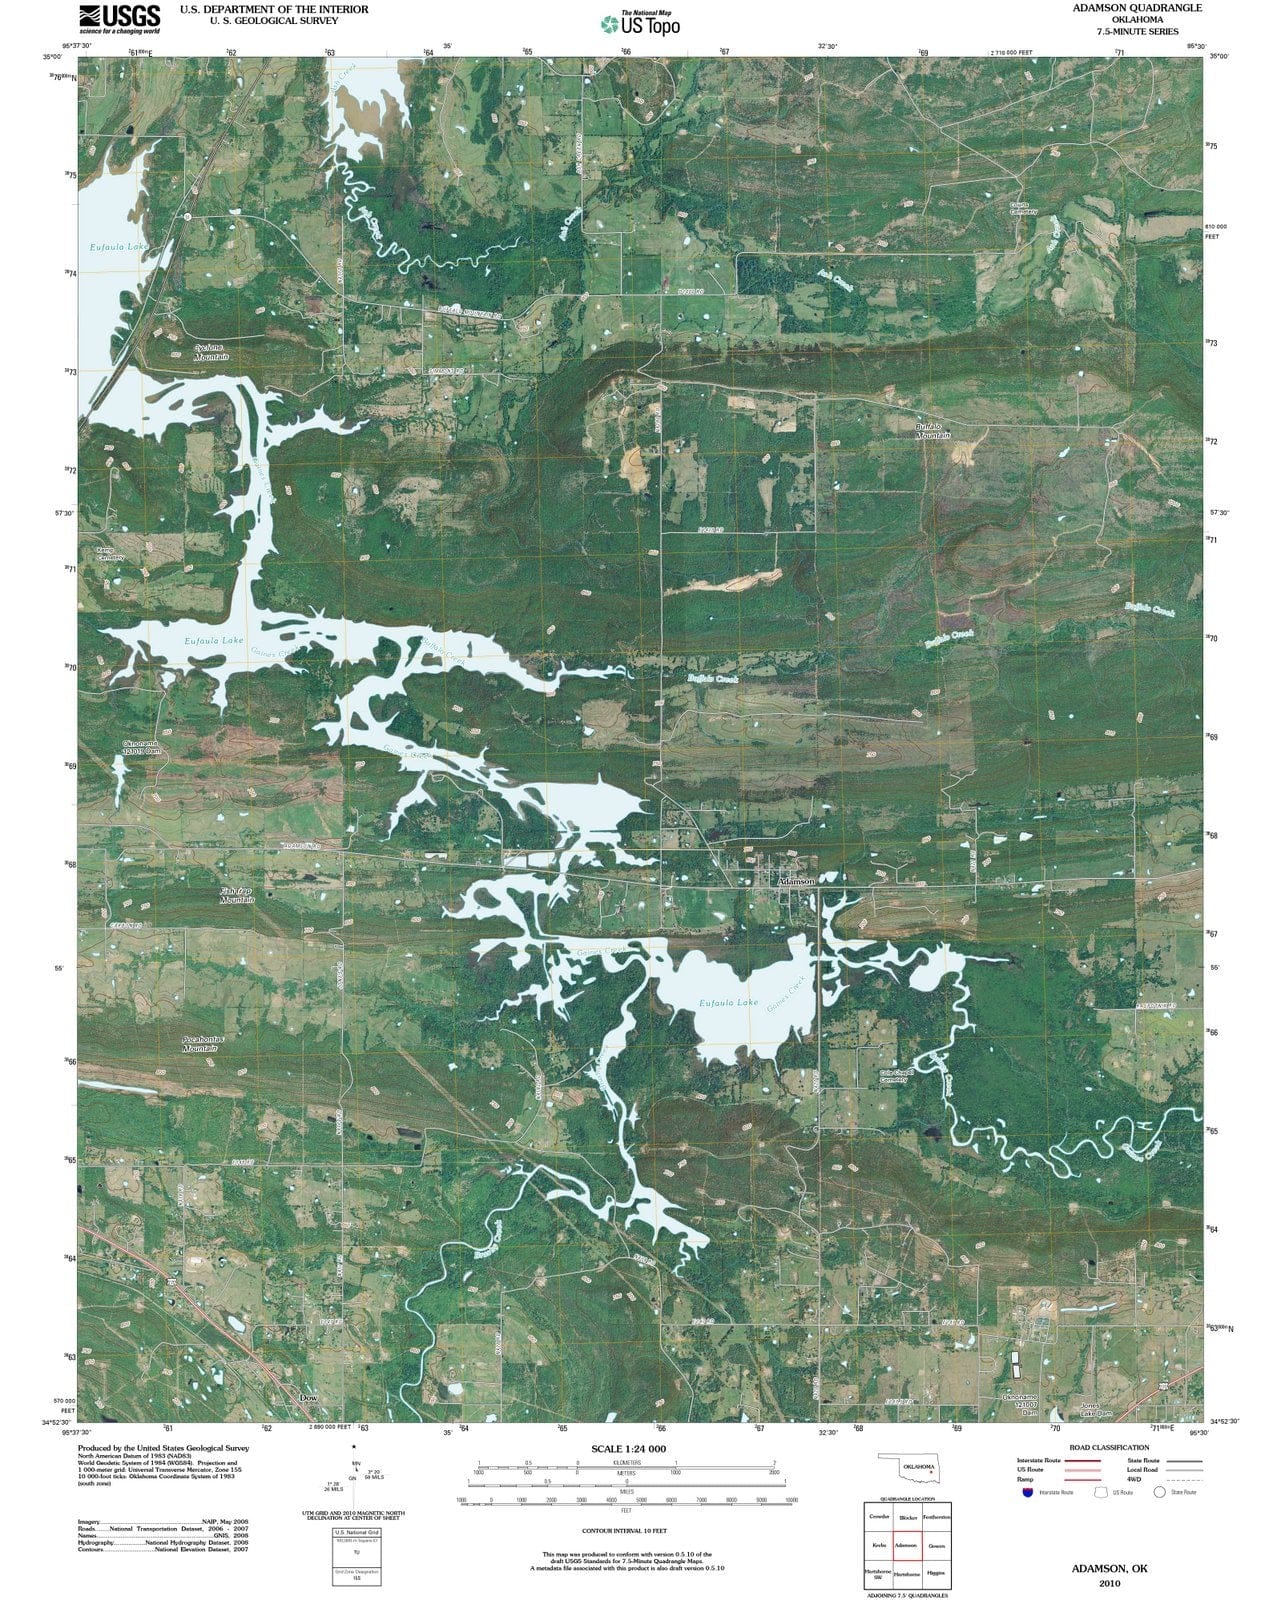 2010 Adamson, OK - Oklahoma - USGS Topographic Map